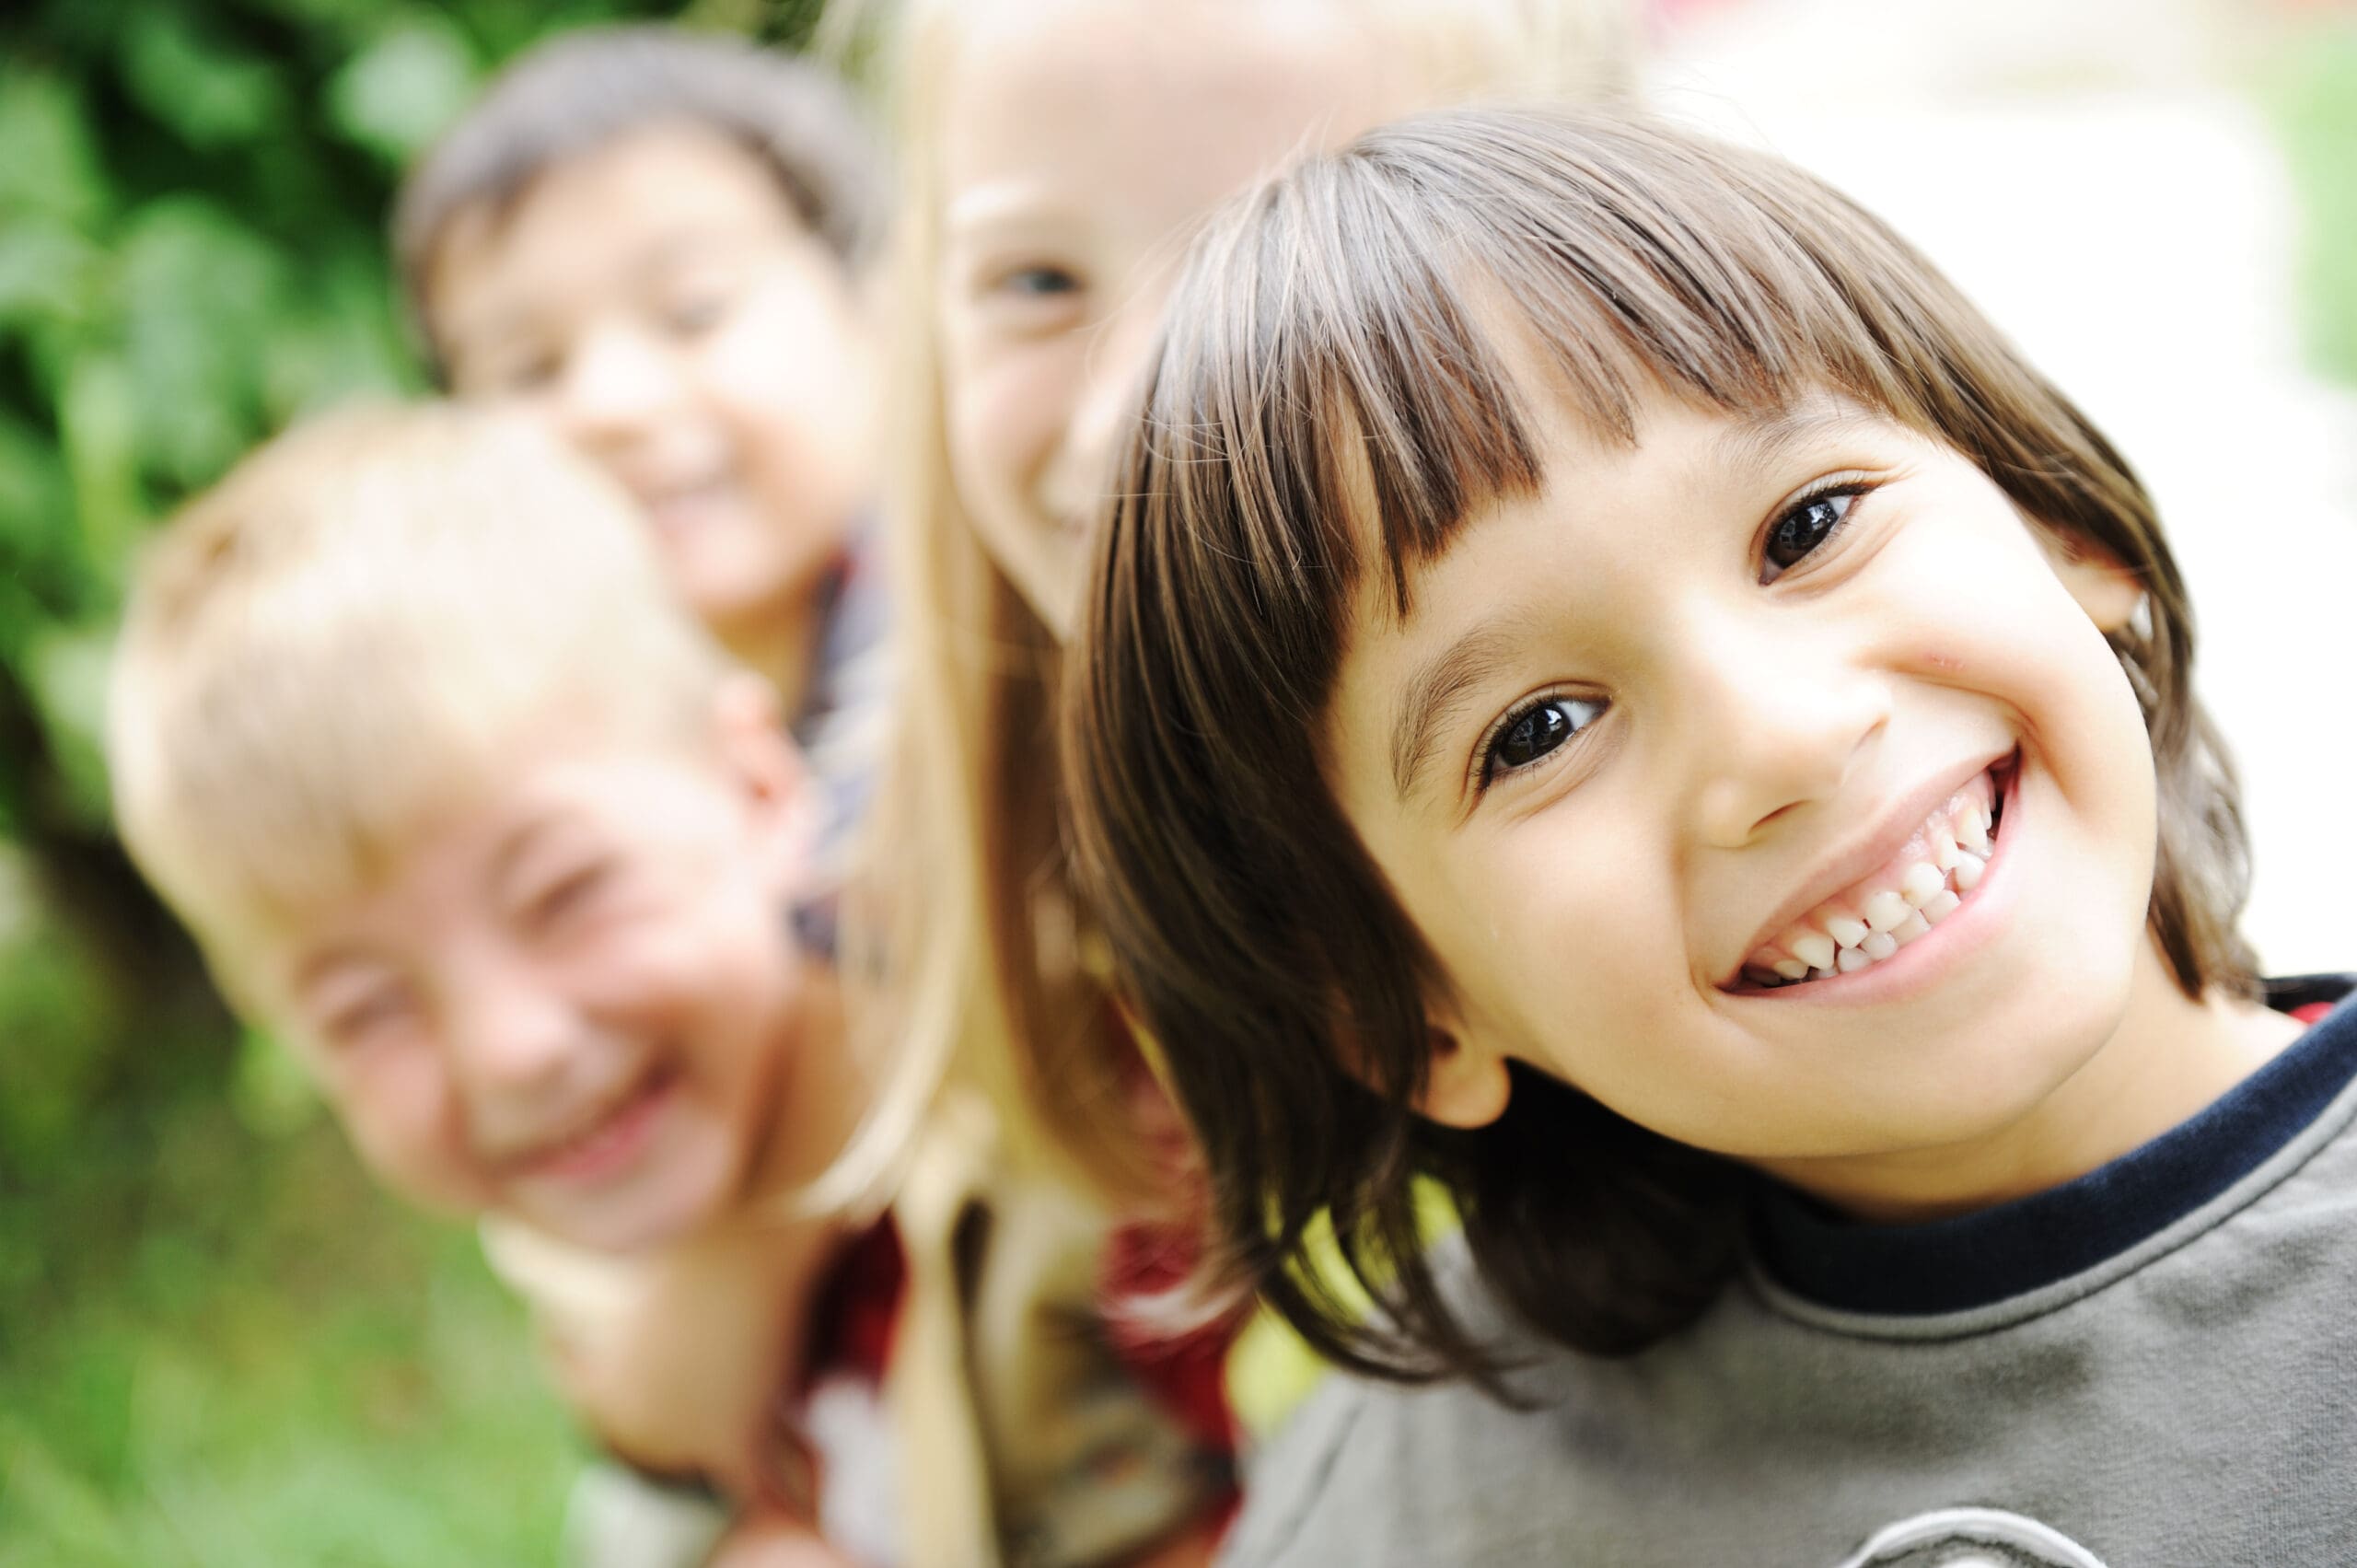 A group of children are smiling despite trauma.